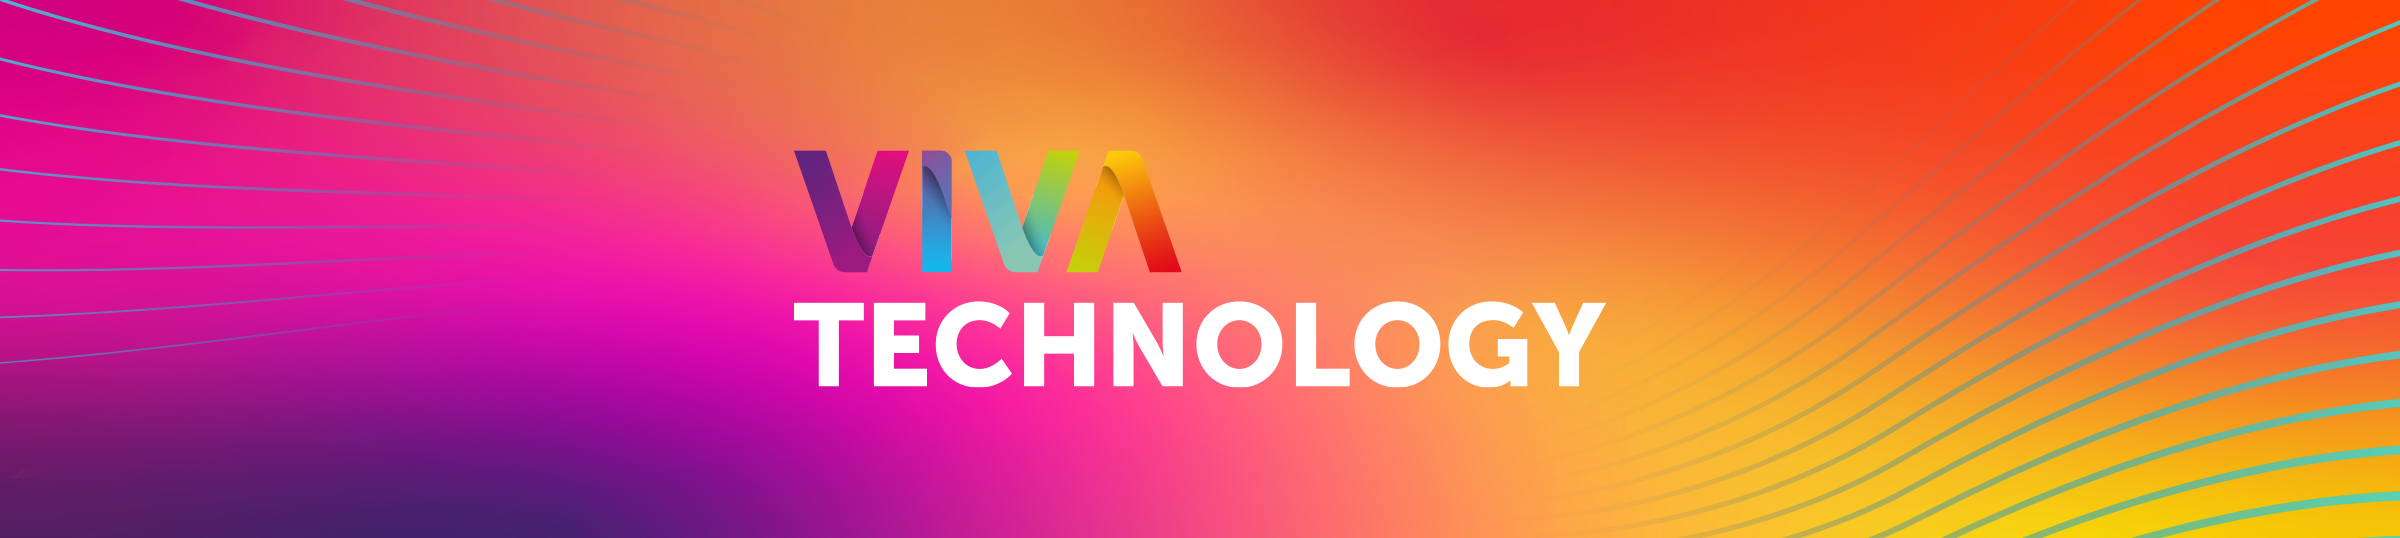 Registration form for Viva Technology 2022